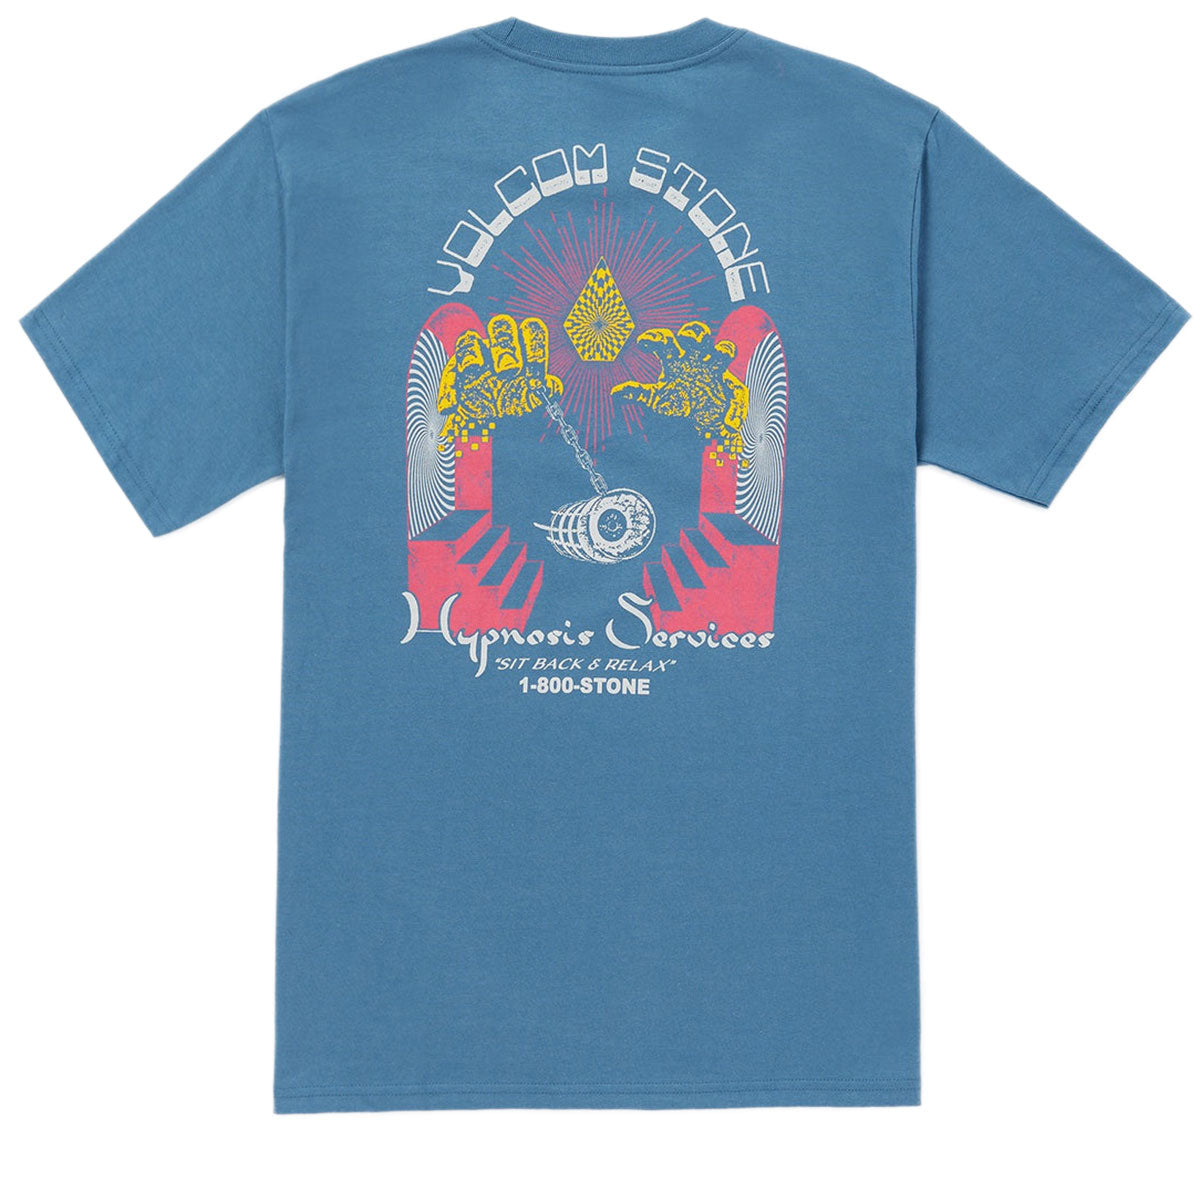 Volcom 1800 Stone T-Shirt - Dark Blue image 1